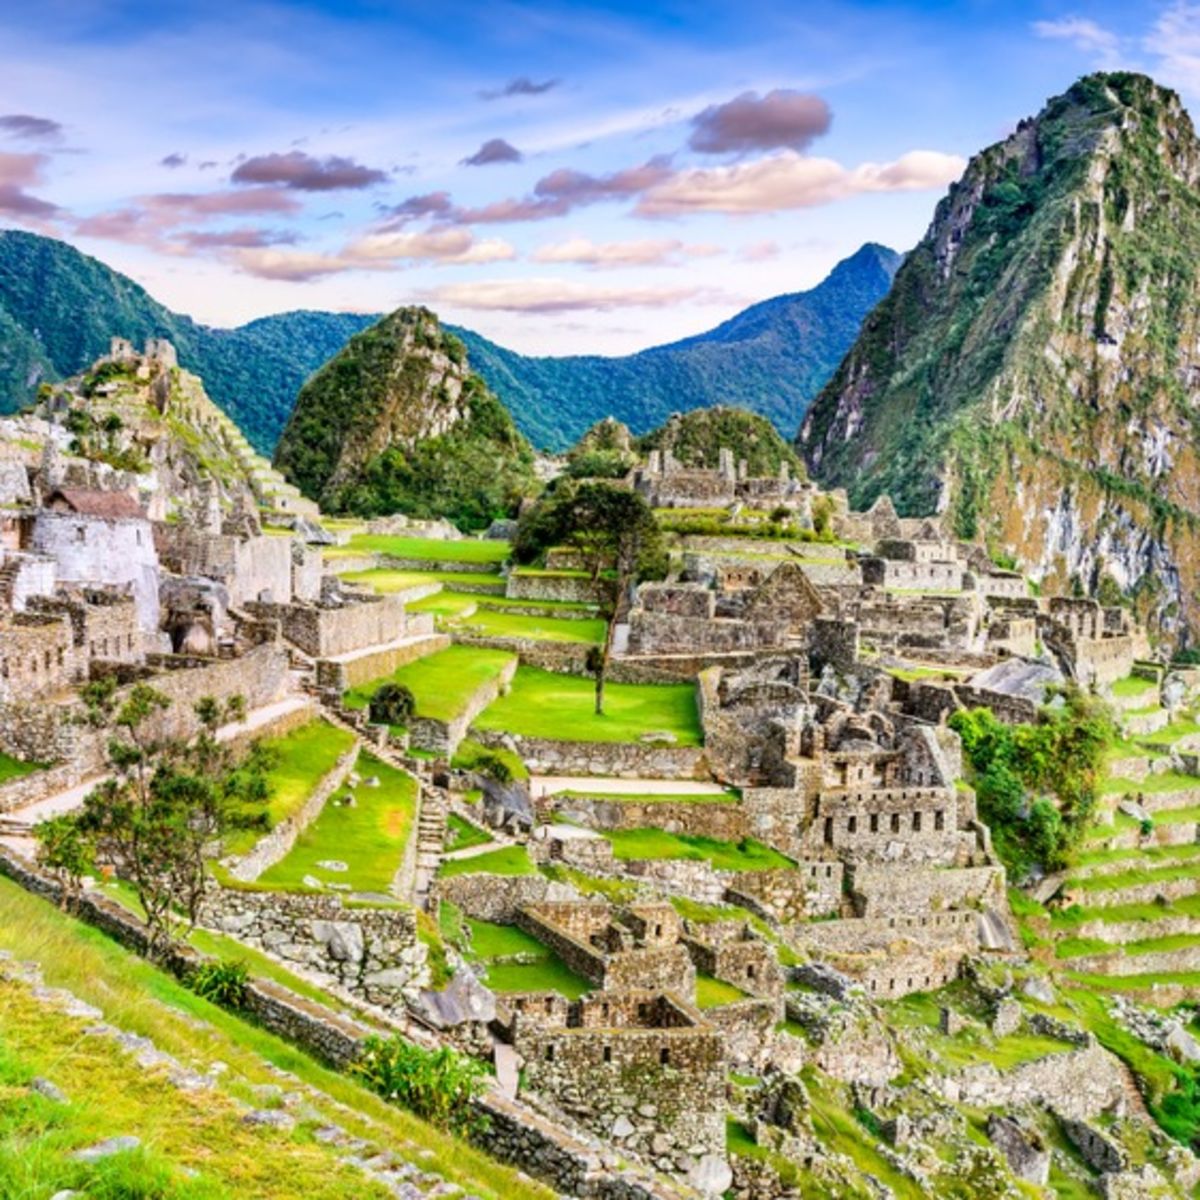 Machu Picchu in Peru - Ruins of Inca Empire city and Huaynapicchu Mountain in Sacred Valley, Cusco